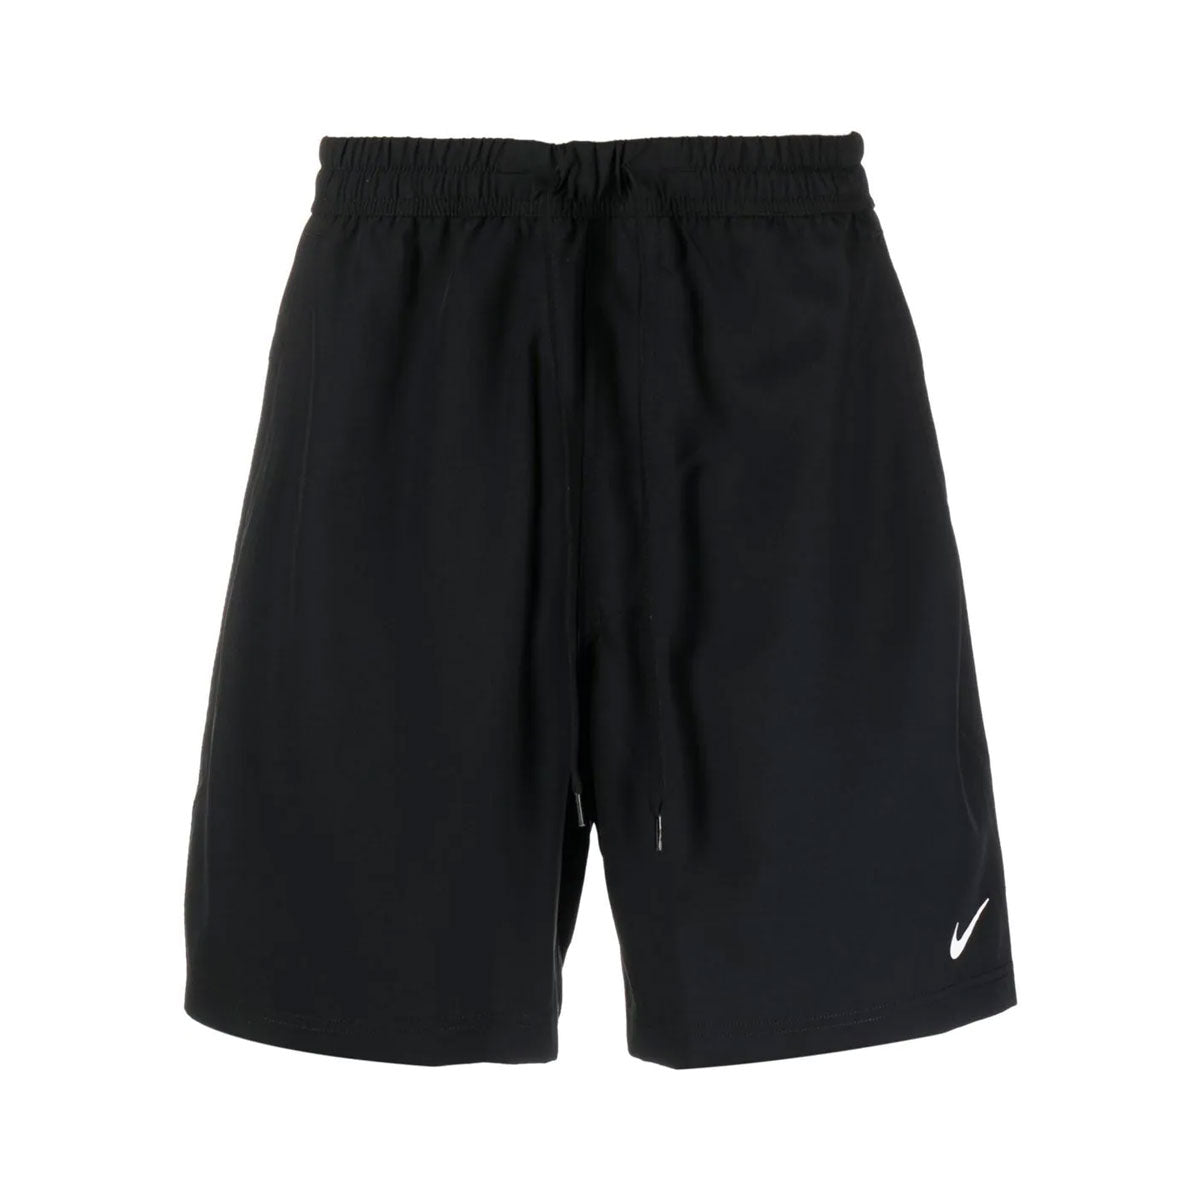 Nike Men's Dri-FIT Knit 7in Training Shorts